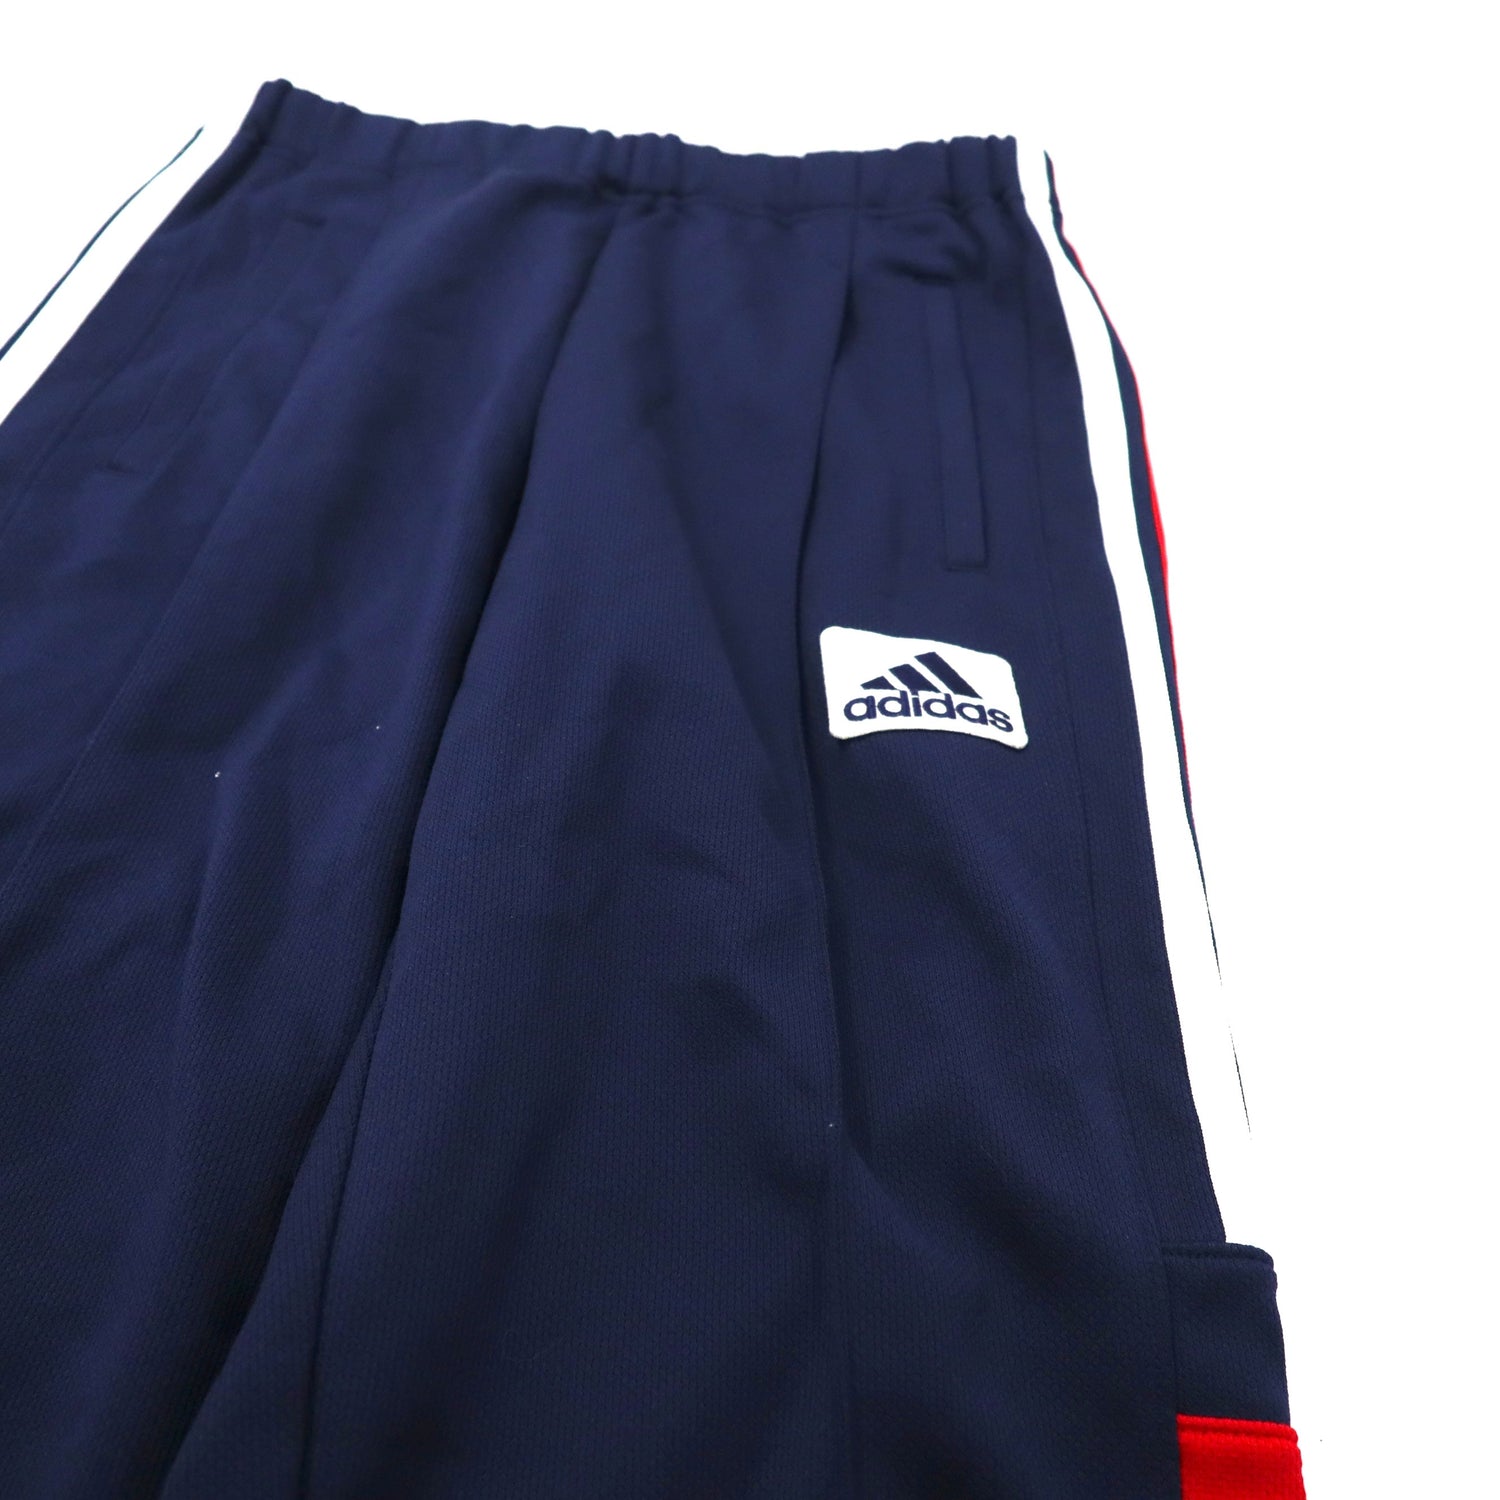 Adidas Track Jacket Setup Jersey S-M Navy Descente MADE 90s